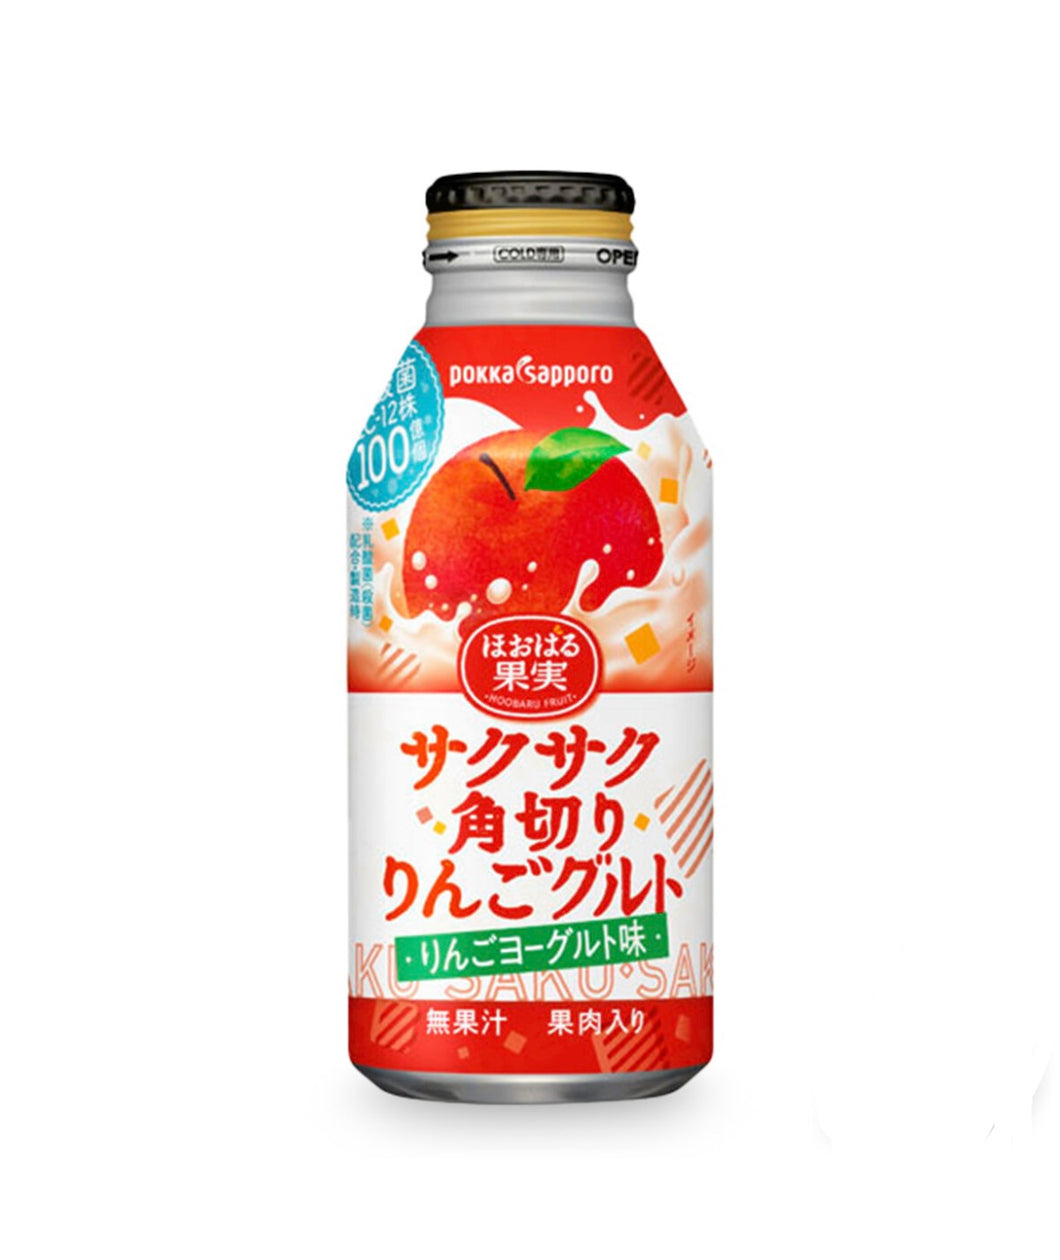 Pokka Sapporo Apple Yogurt Drink with Bits 380ml *** <br> Pokka 札幌粒粒果肉蘋果乳酸飲品